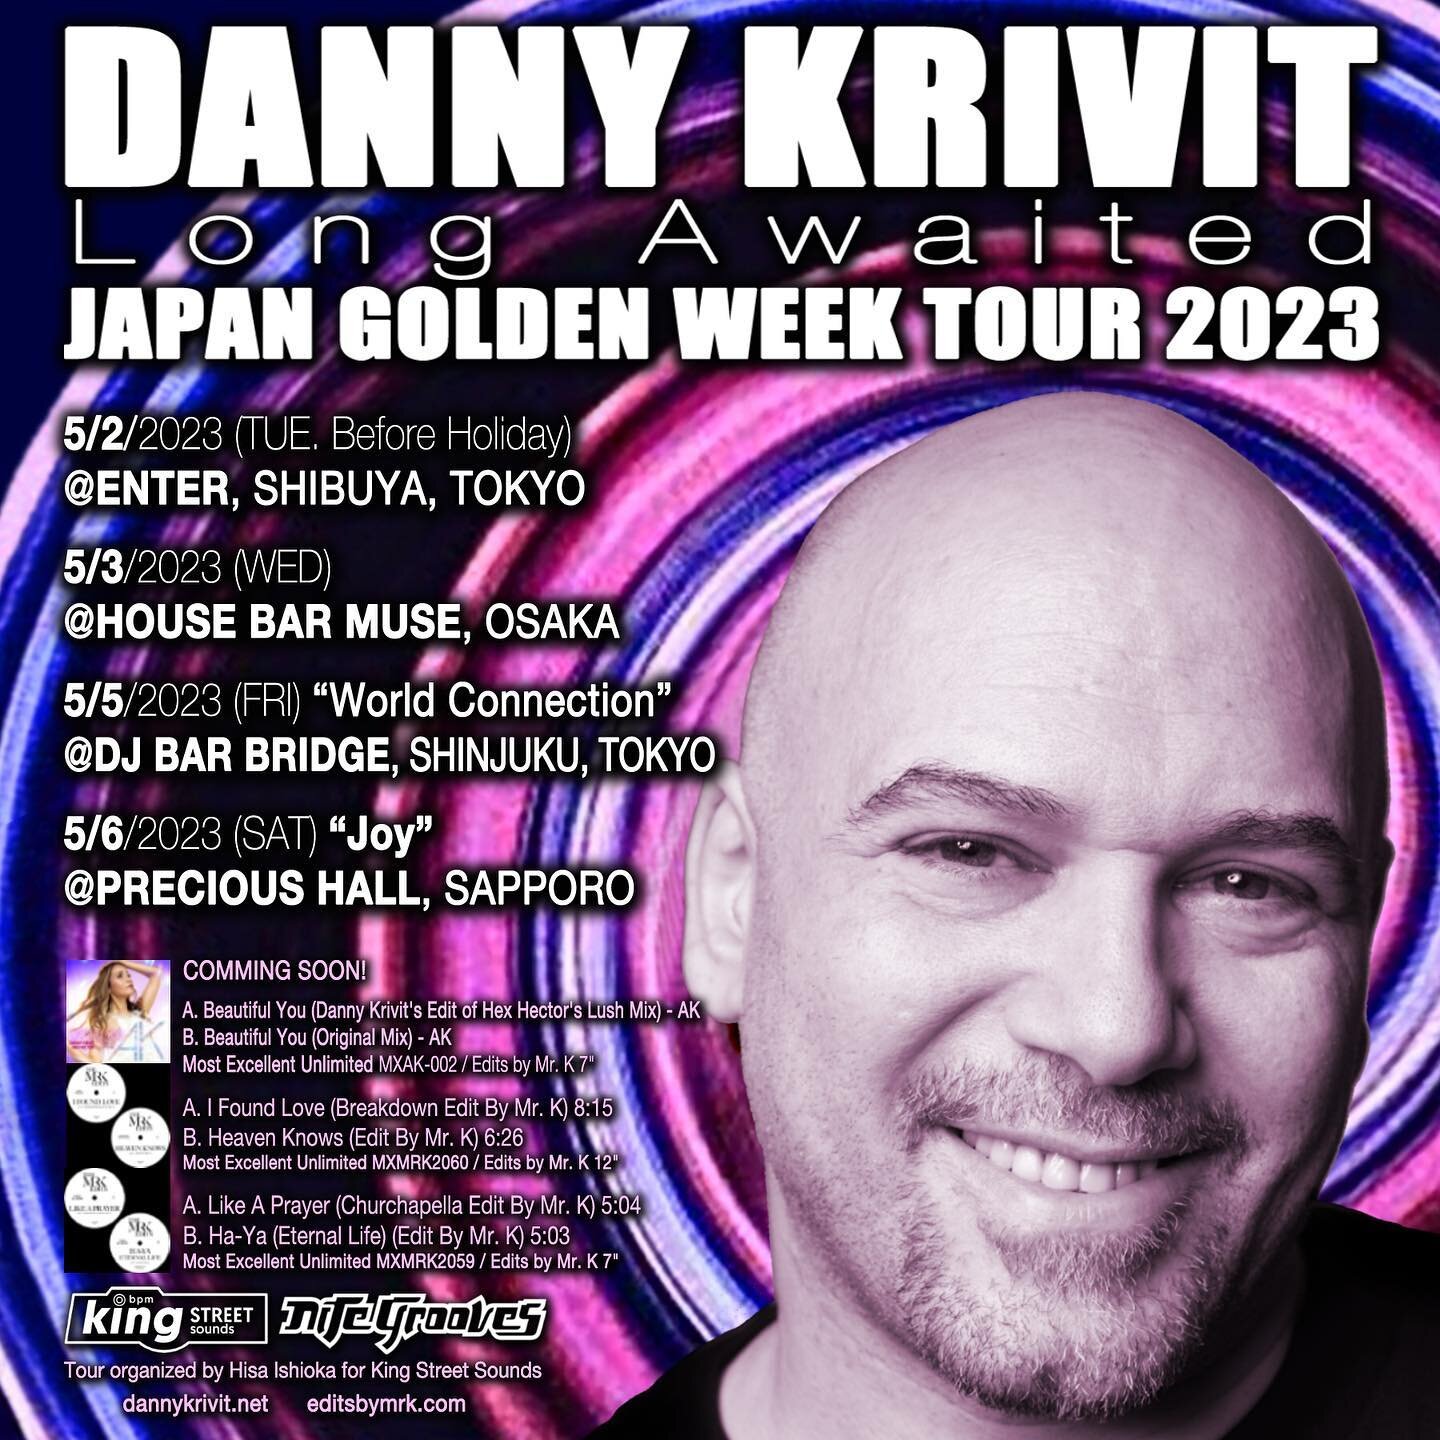 My love, legendary DJ @dannykrivit will be DJing in Japan 5/2-5/6 for the Golden Week Tour! Tokyo, Osaka, Sapporo. It's been 4 years &amp; Danny's so looking forward to it. Details below. Please join❤️ X AK

日本のみなさま、最愛のレジェンドDJ、Danny Krivitが4年ぶりに日本でDJ